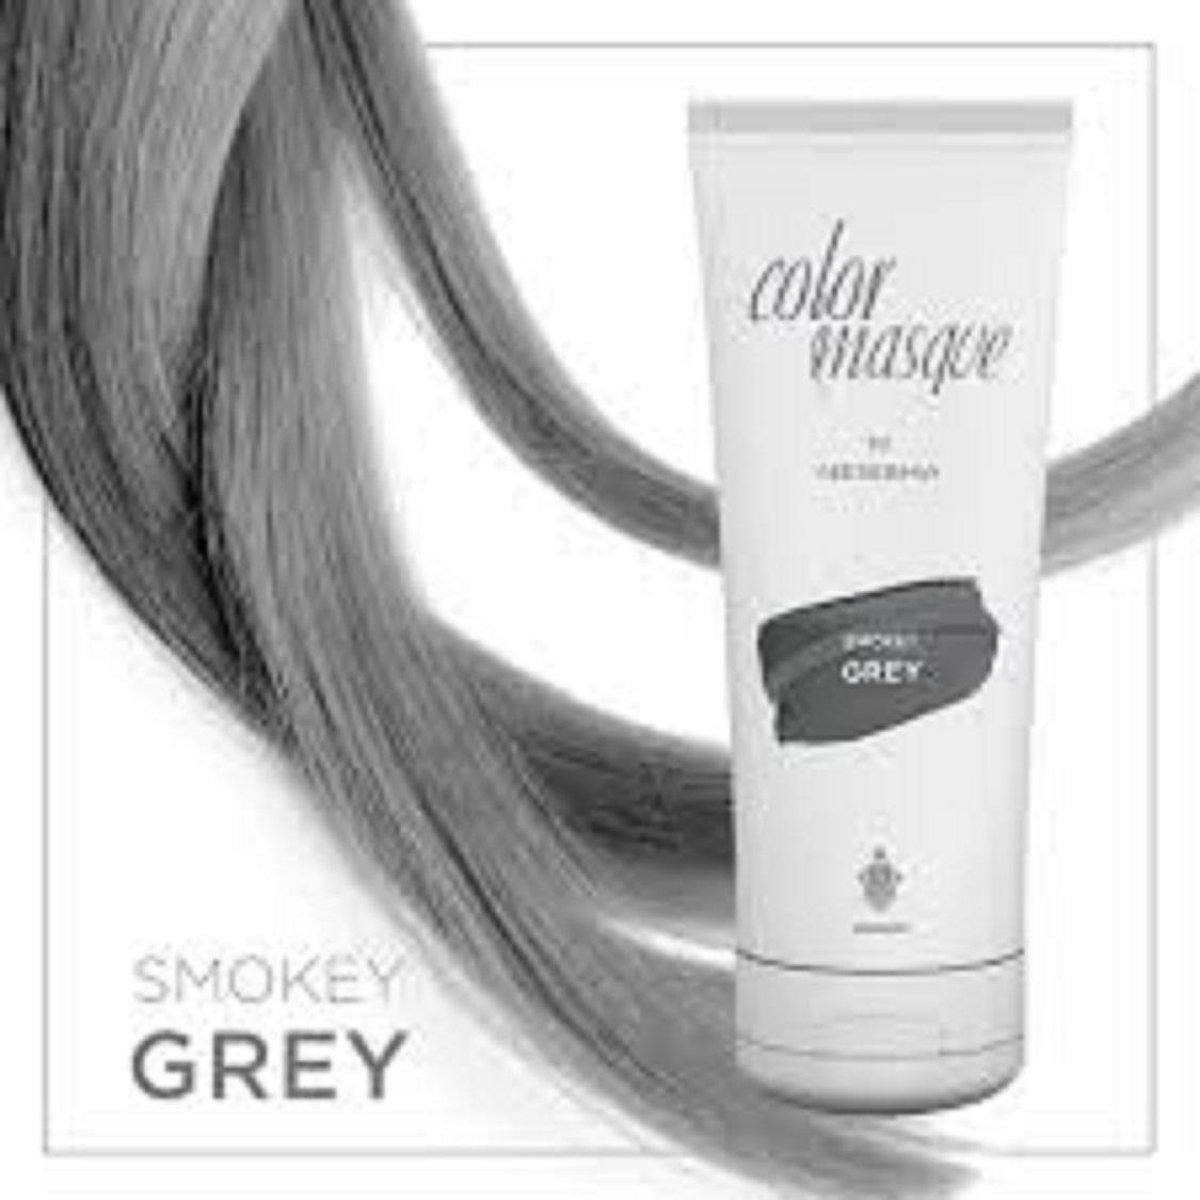 NEWSHA COLOR MASQUE - Smokey Grey 150ML